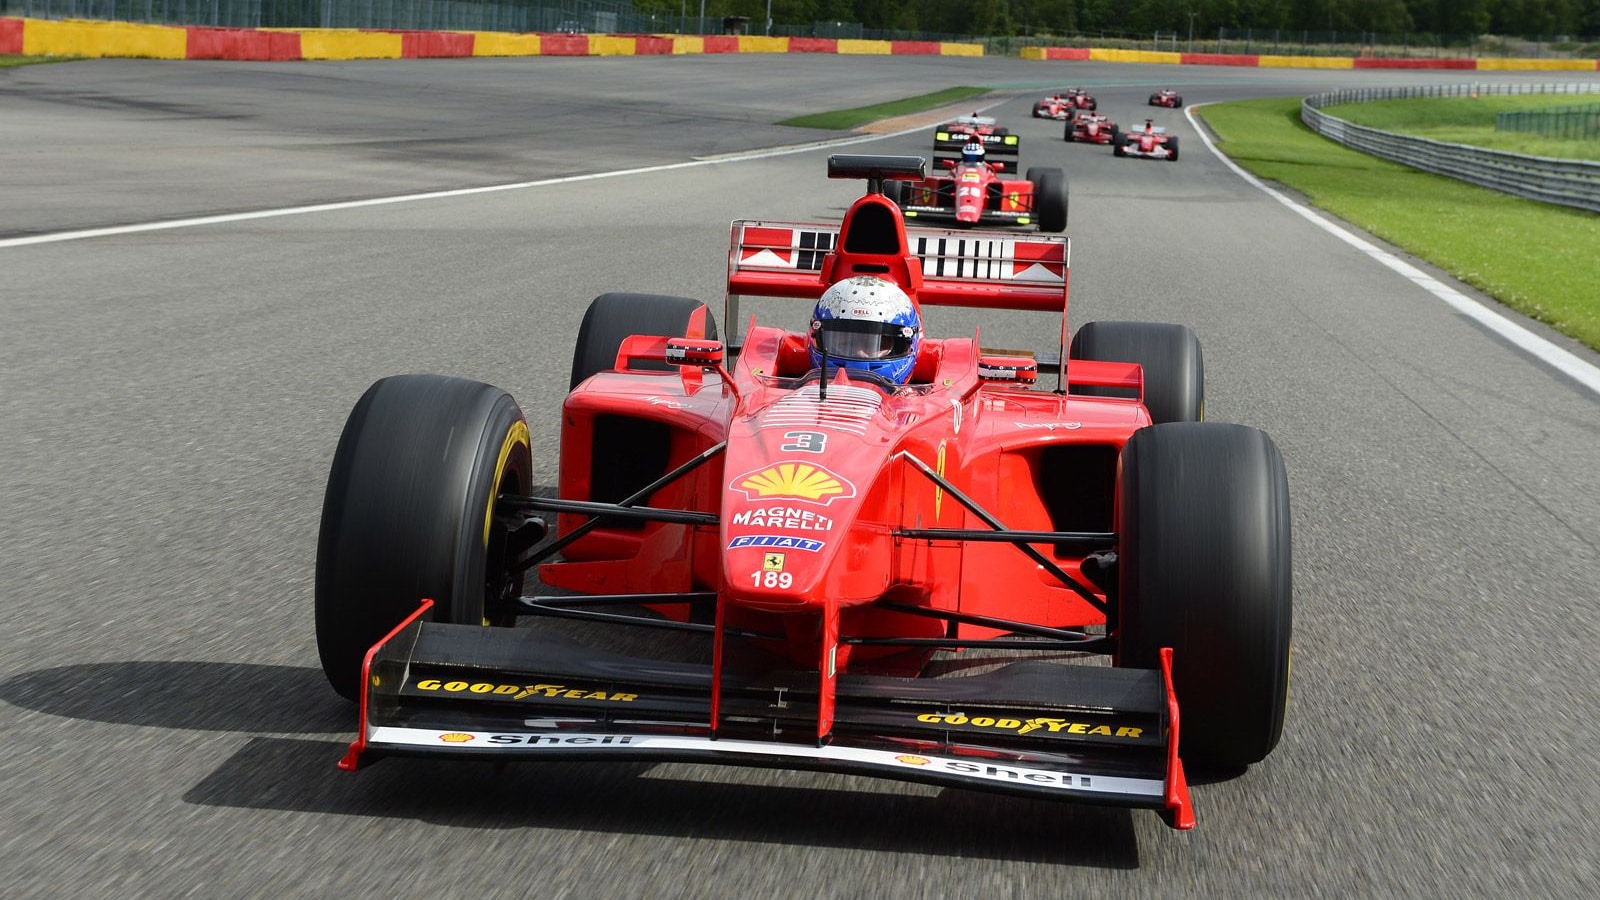 Ferrari F1 Clienti and XX Program at Spa Francorchamps, July 2012